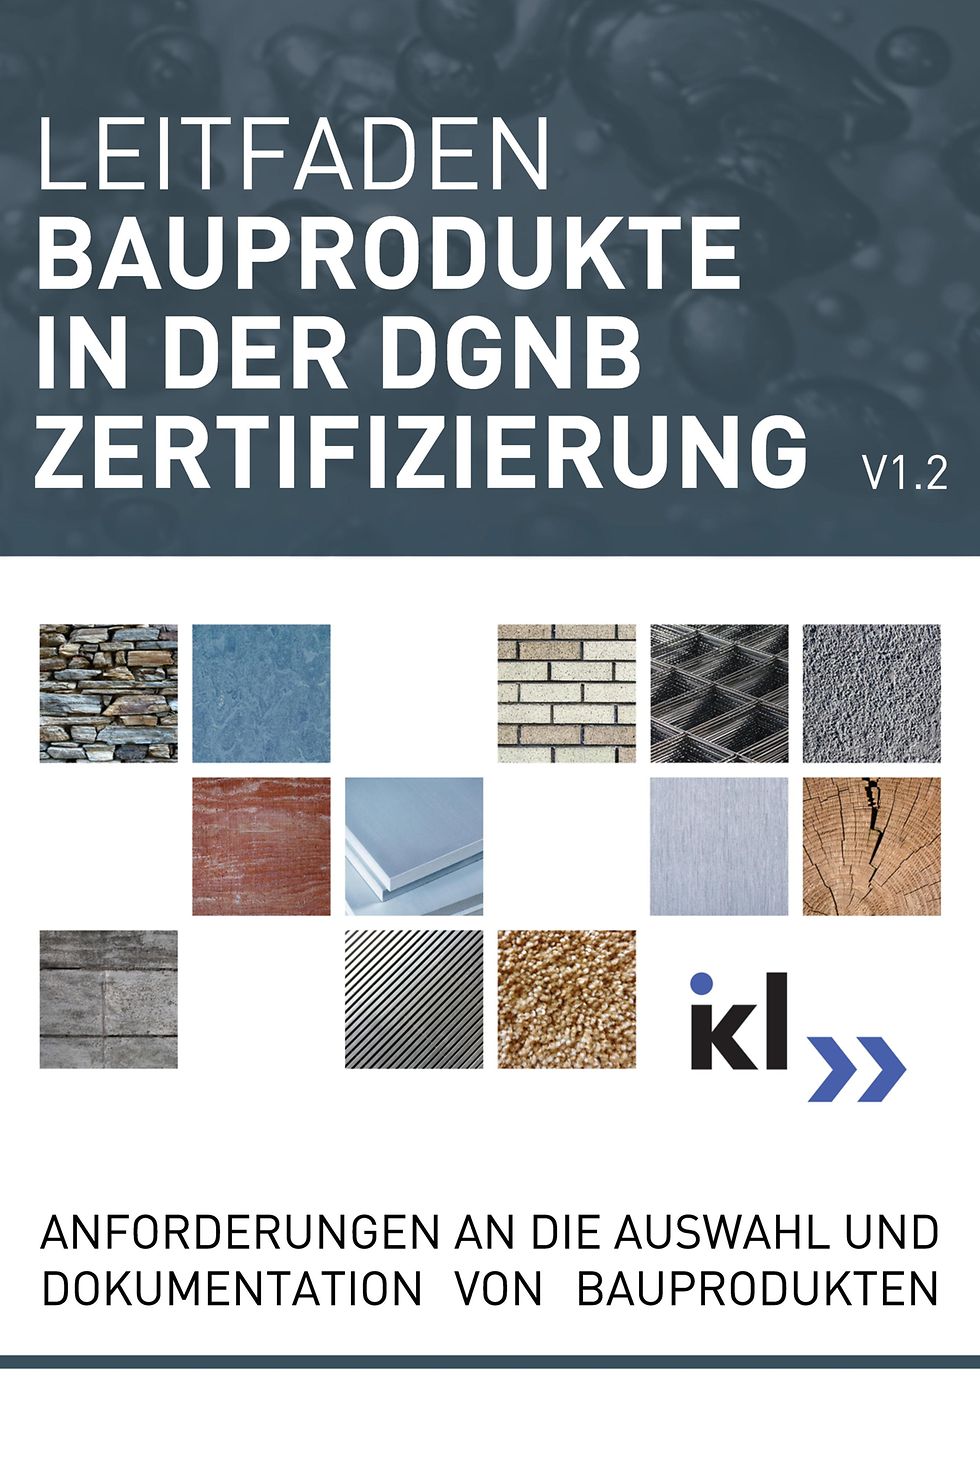 Leitfaden Bauprodukte in der DGNB-Zertifizierung (Titelbild)